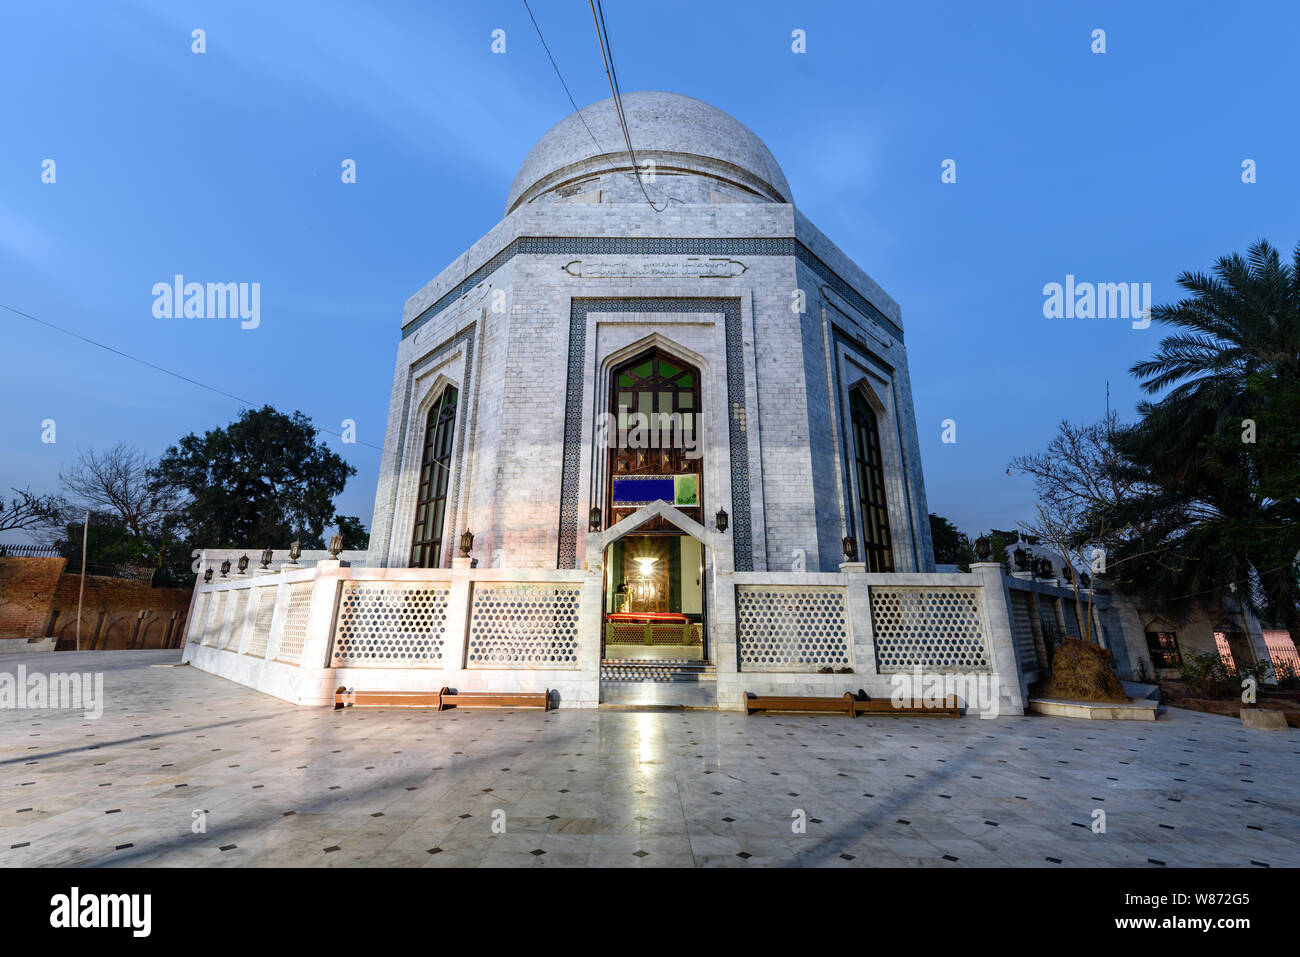 Rehman Baba ,a renowned sufi dervish and poet,tomb located in Hazar Khwani Peshawar, Pakistan Stock Photo